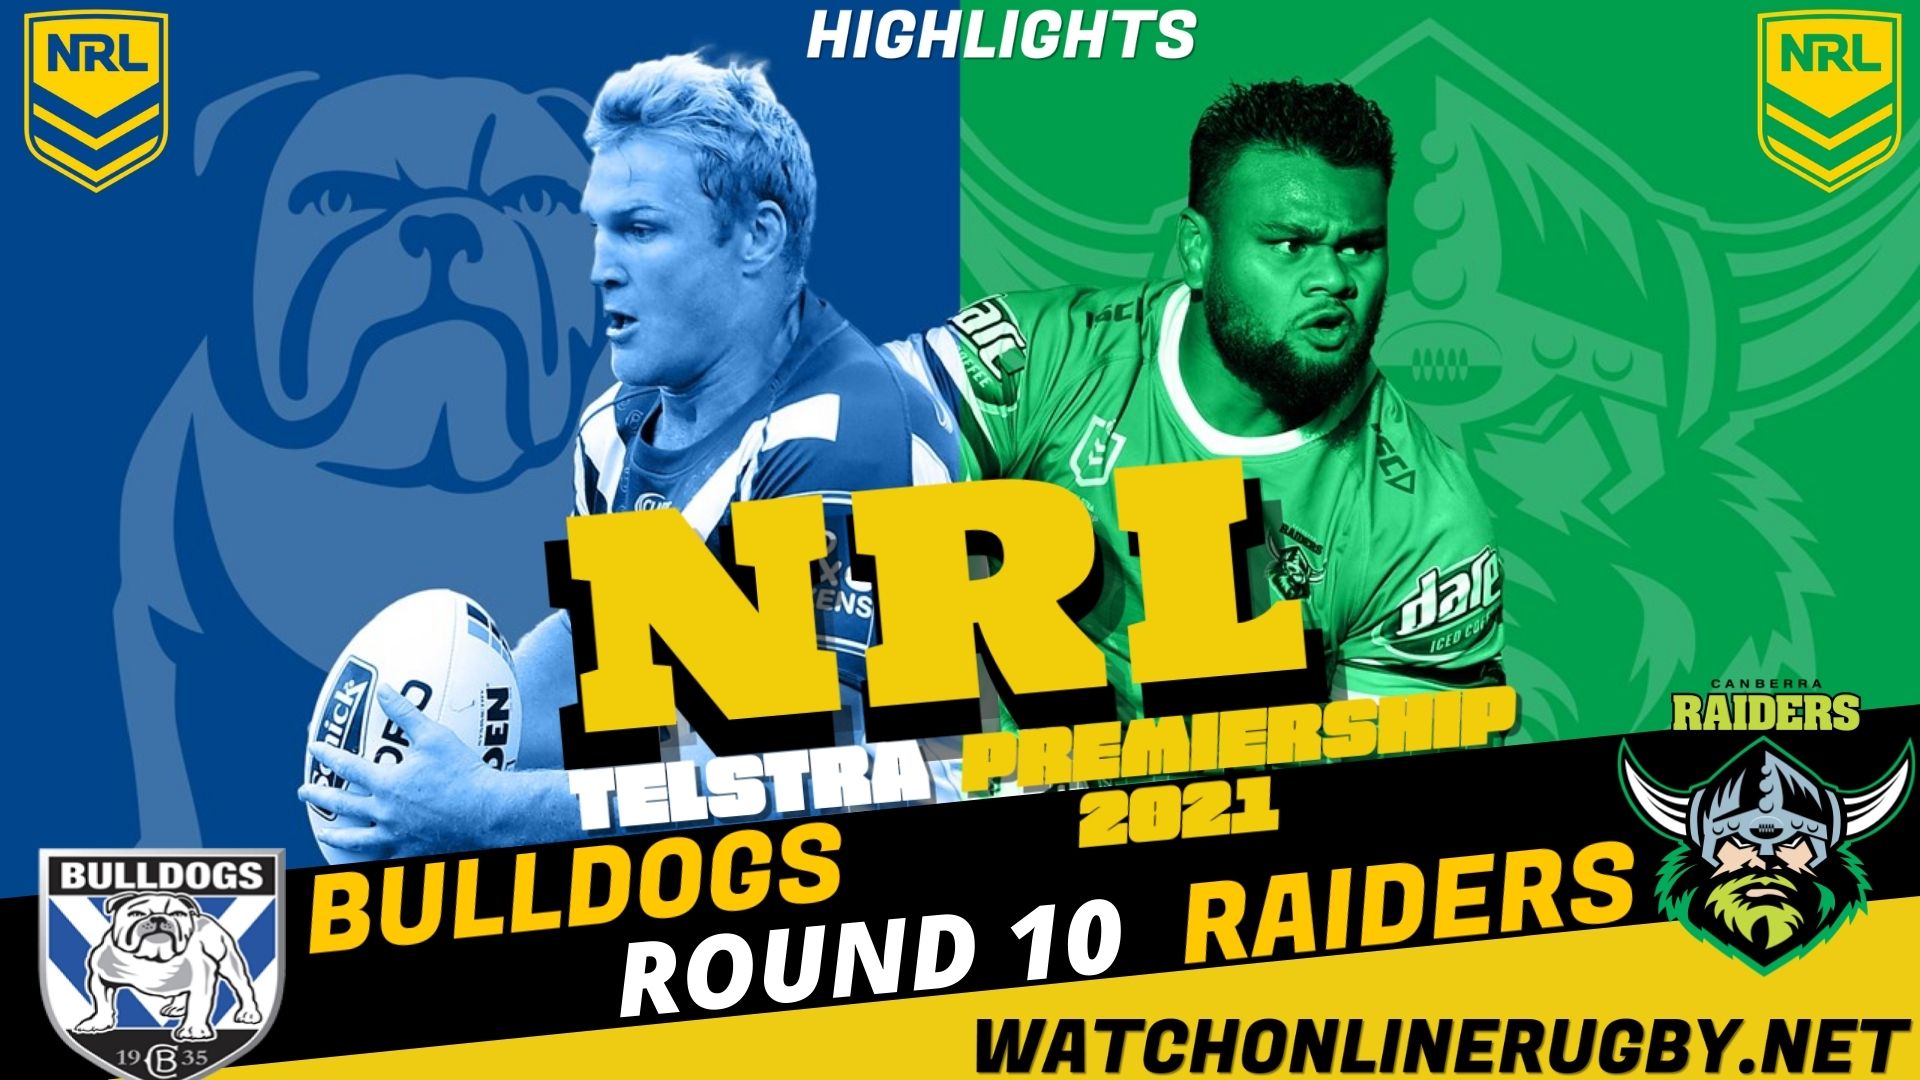 Bulldogs Vs Raiders Highlights RD 10 NRL Rugby